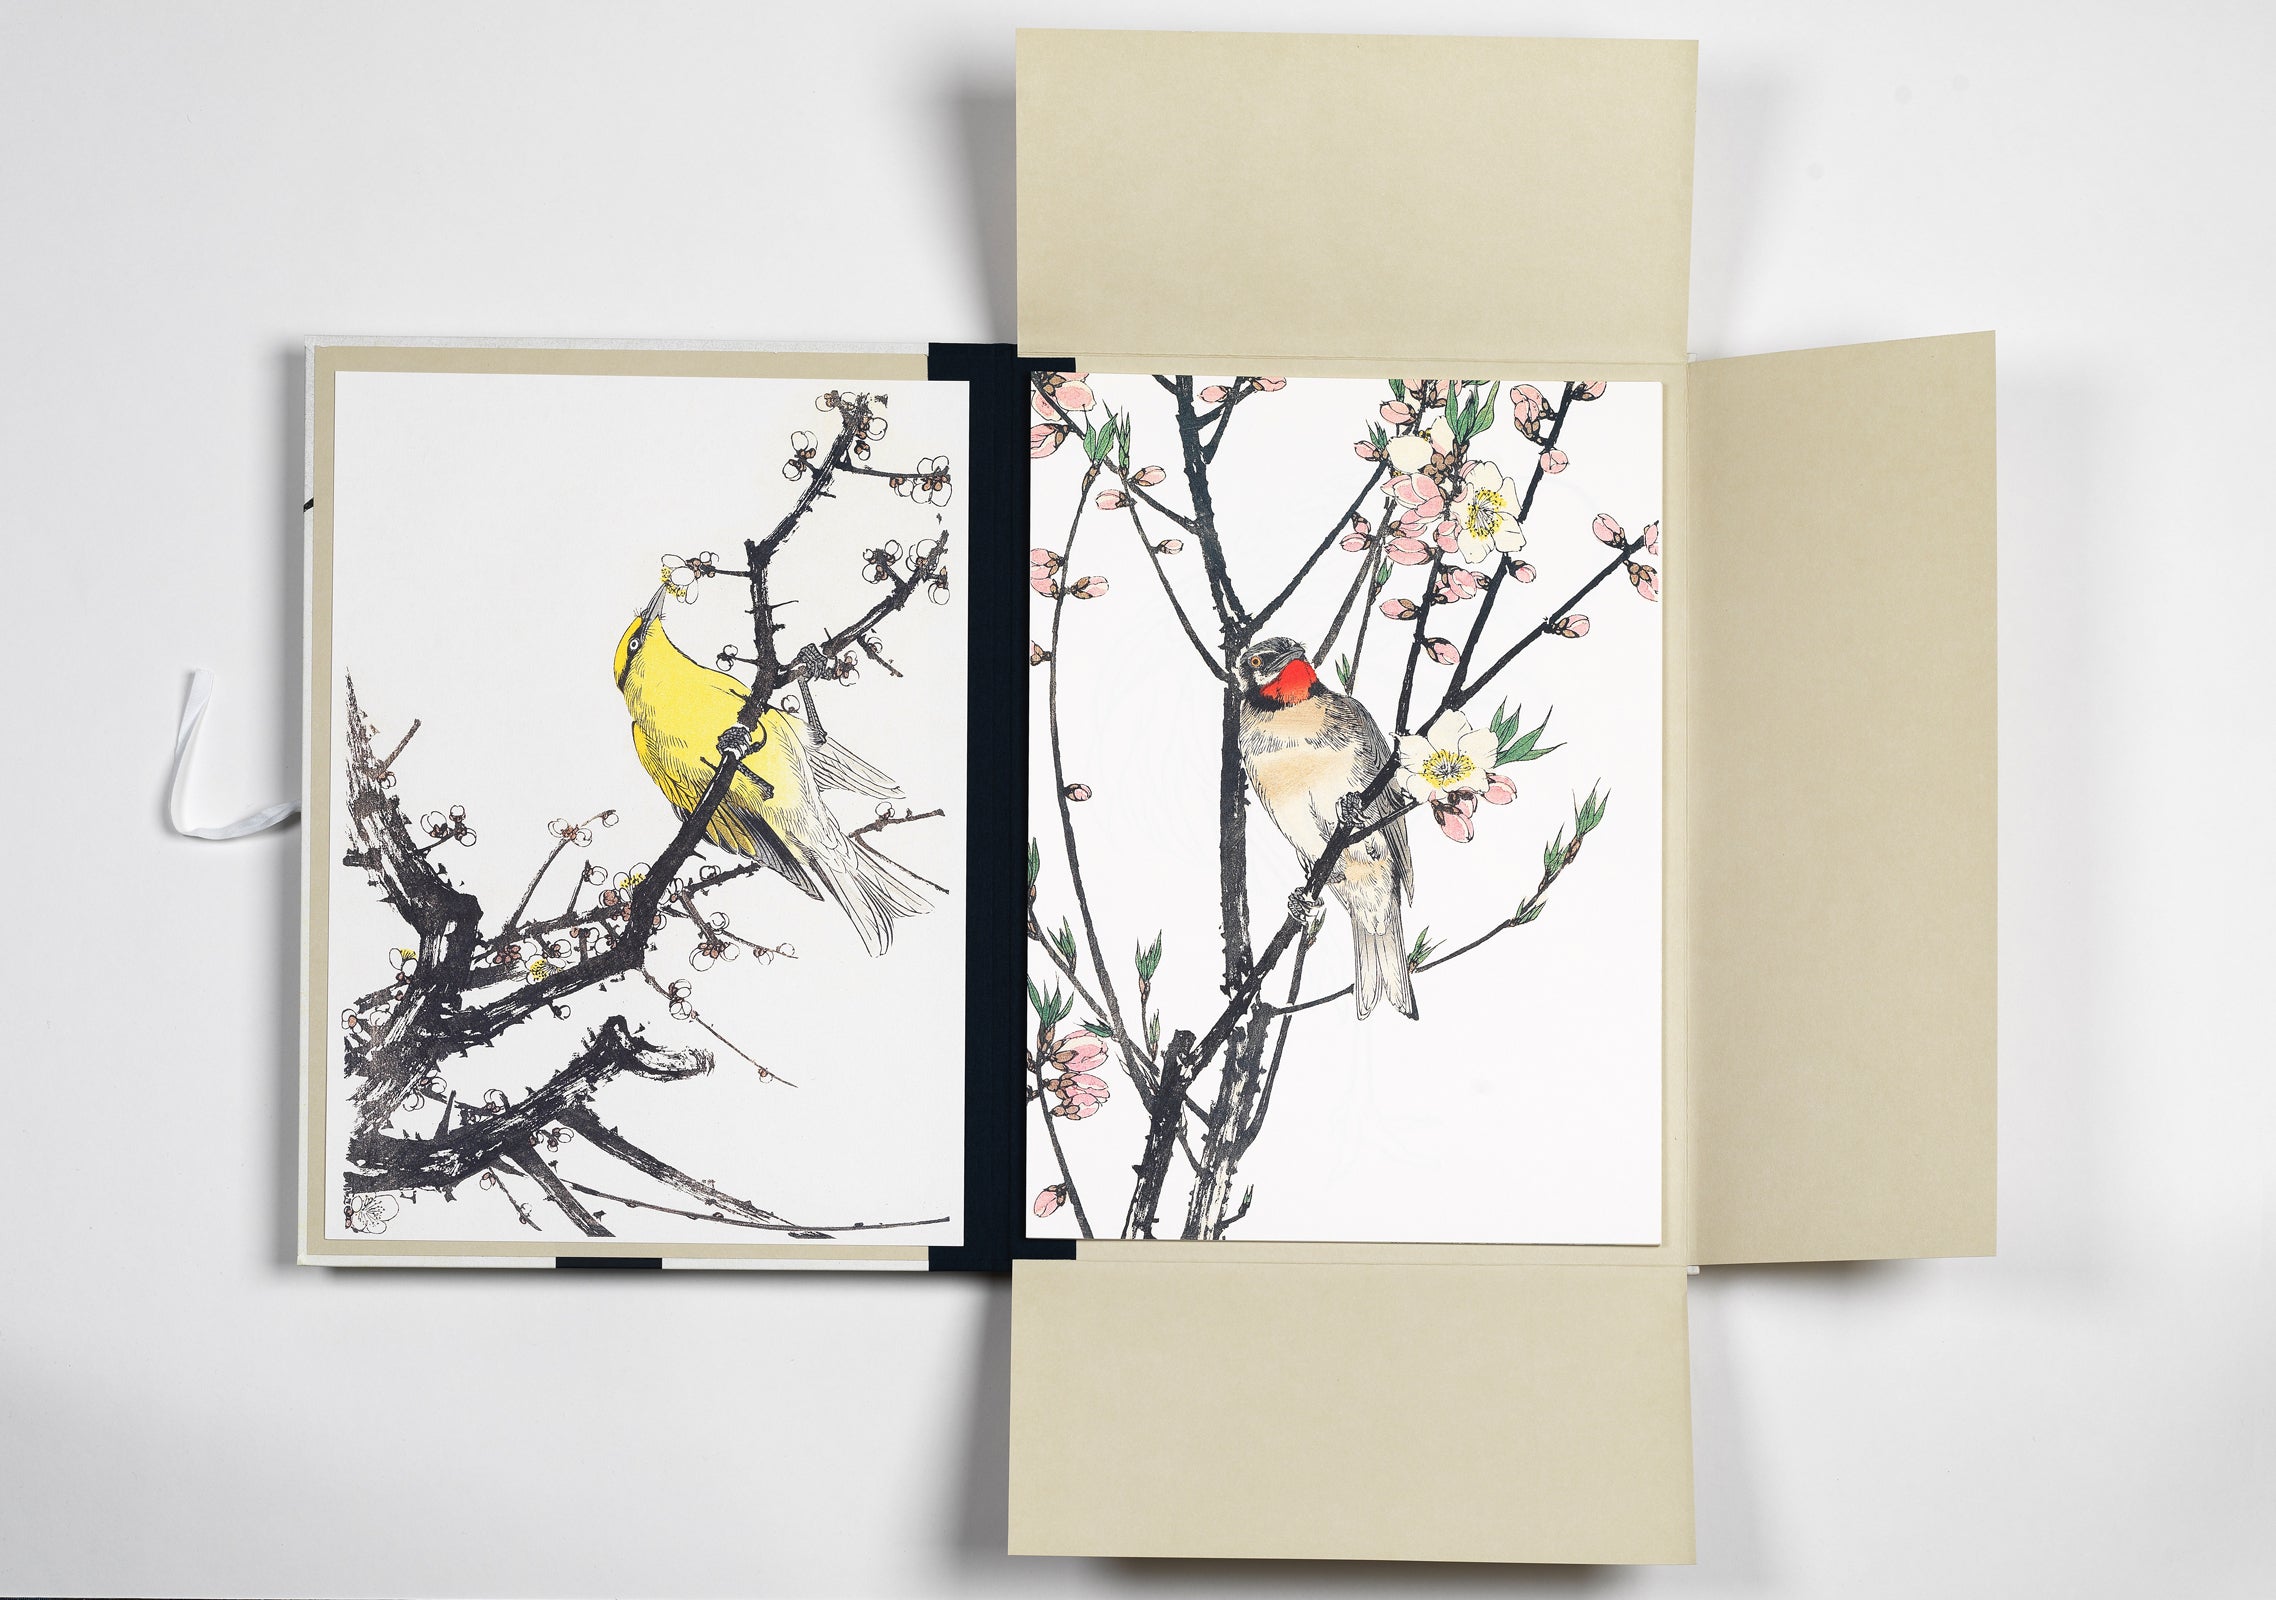 Art portfolios - Japanese Birds